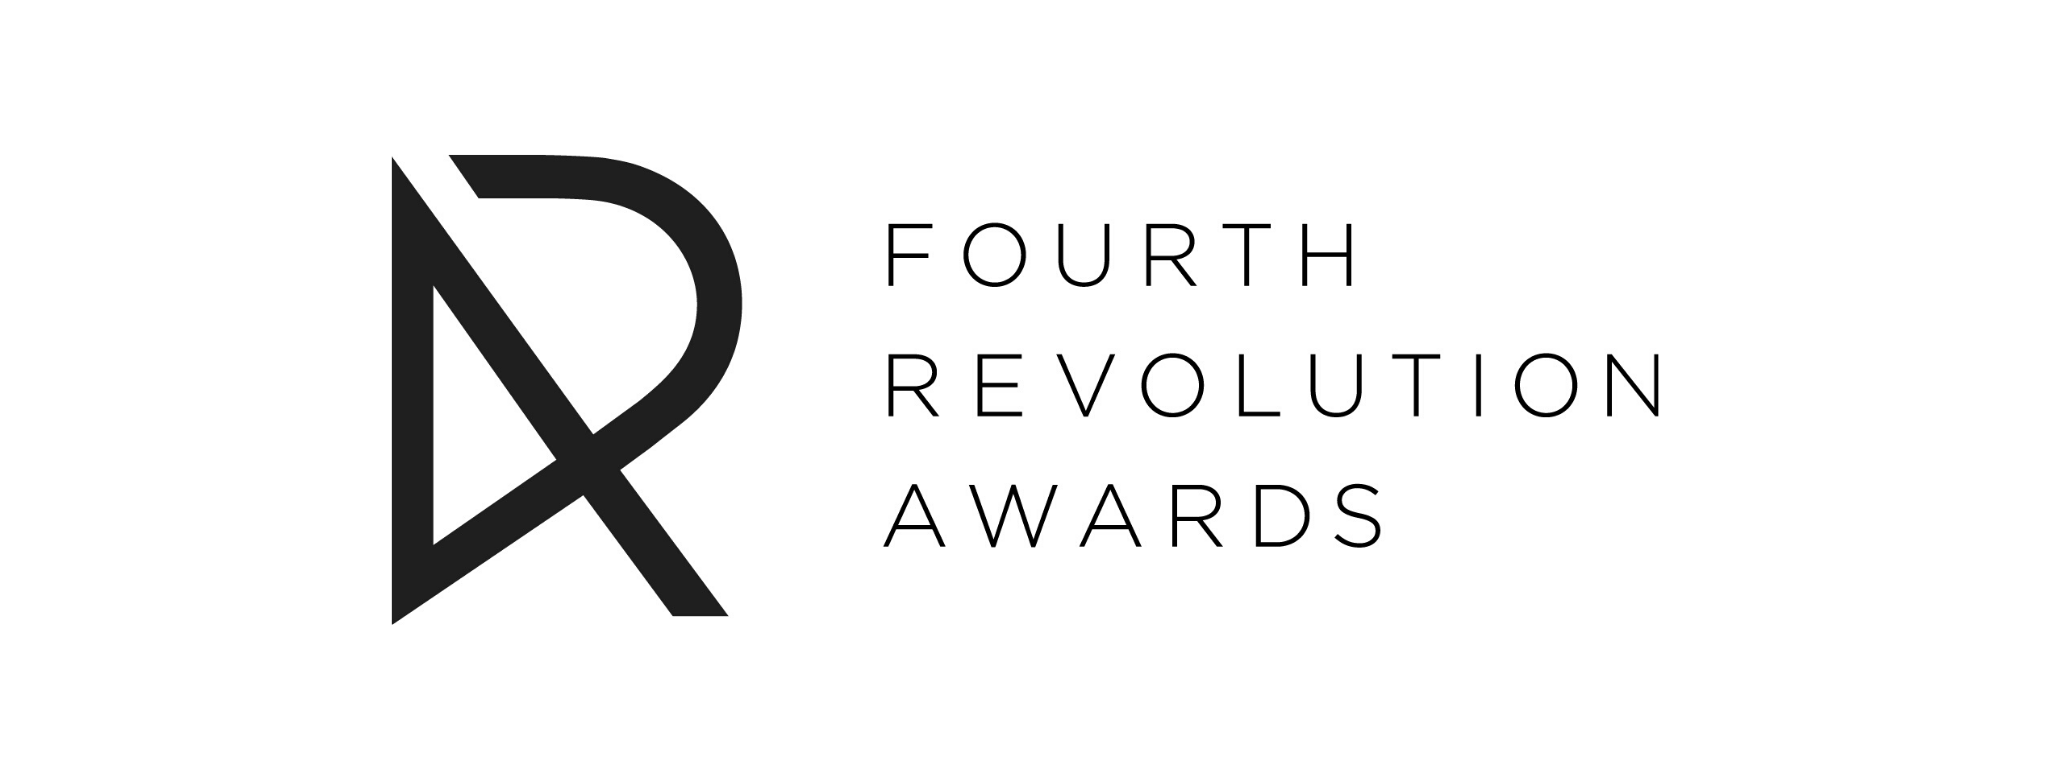 2020 Fourth Revolution Awards